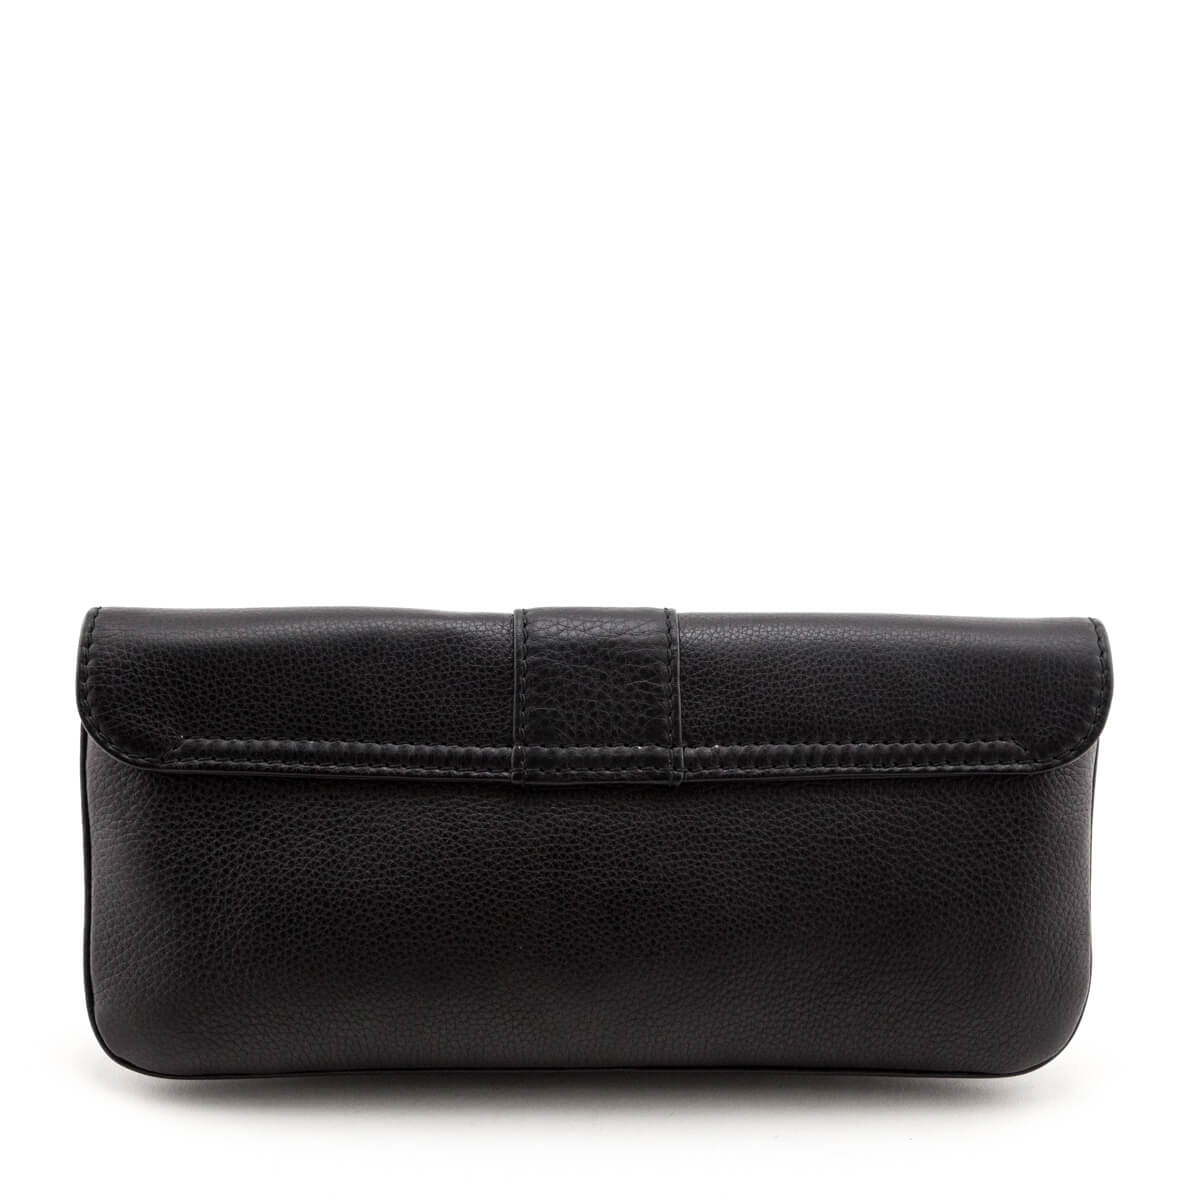 Gucci Black Leather Greenwich Clutch - Preloved Gucci Handbags Canada